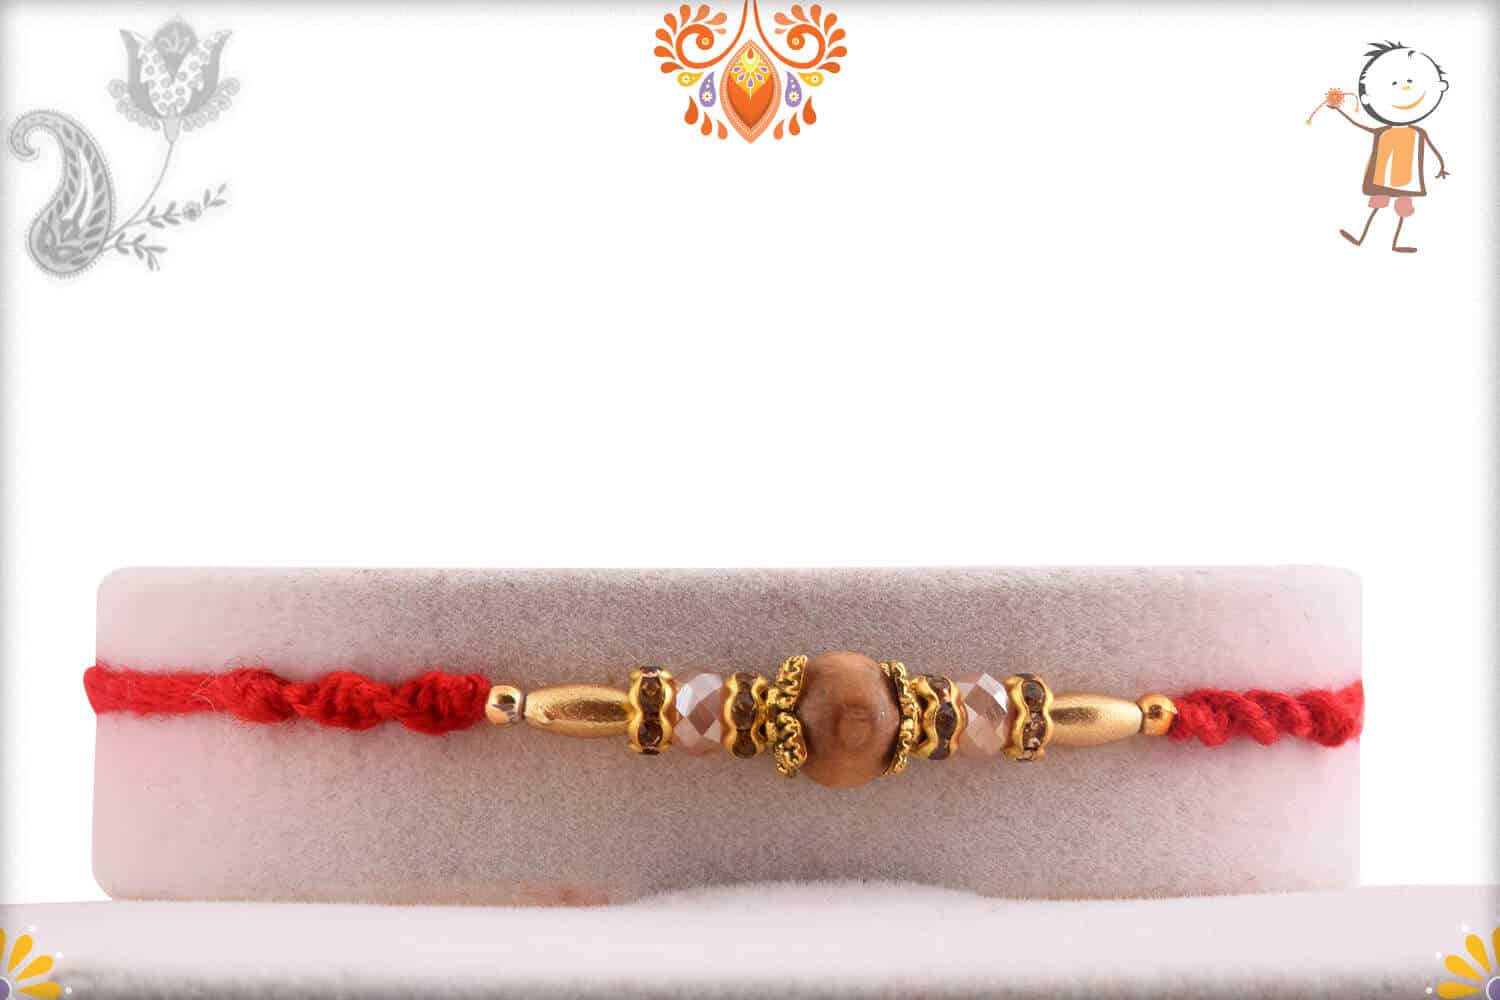 Handcrafted Sandalwood Beads Rakhi with Golden Beads | Send Rakhi Gifts Online 1